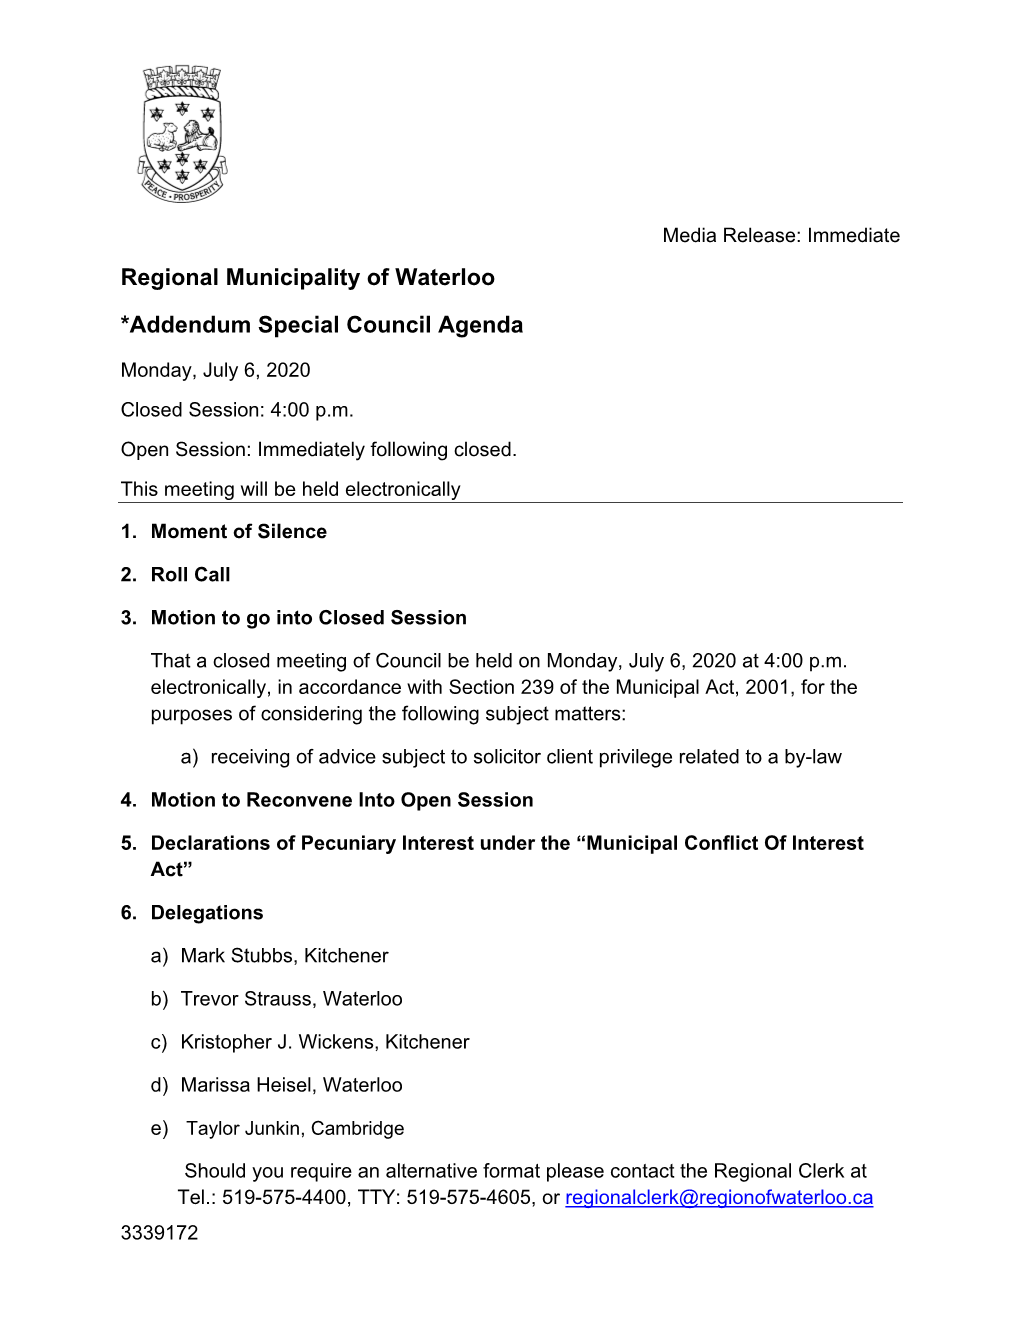 Addendum Special Council Agenda